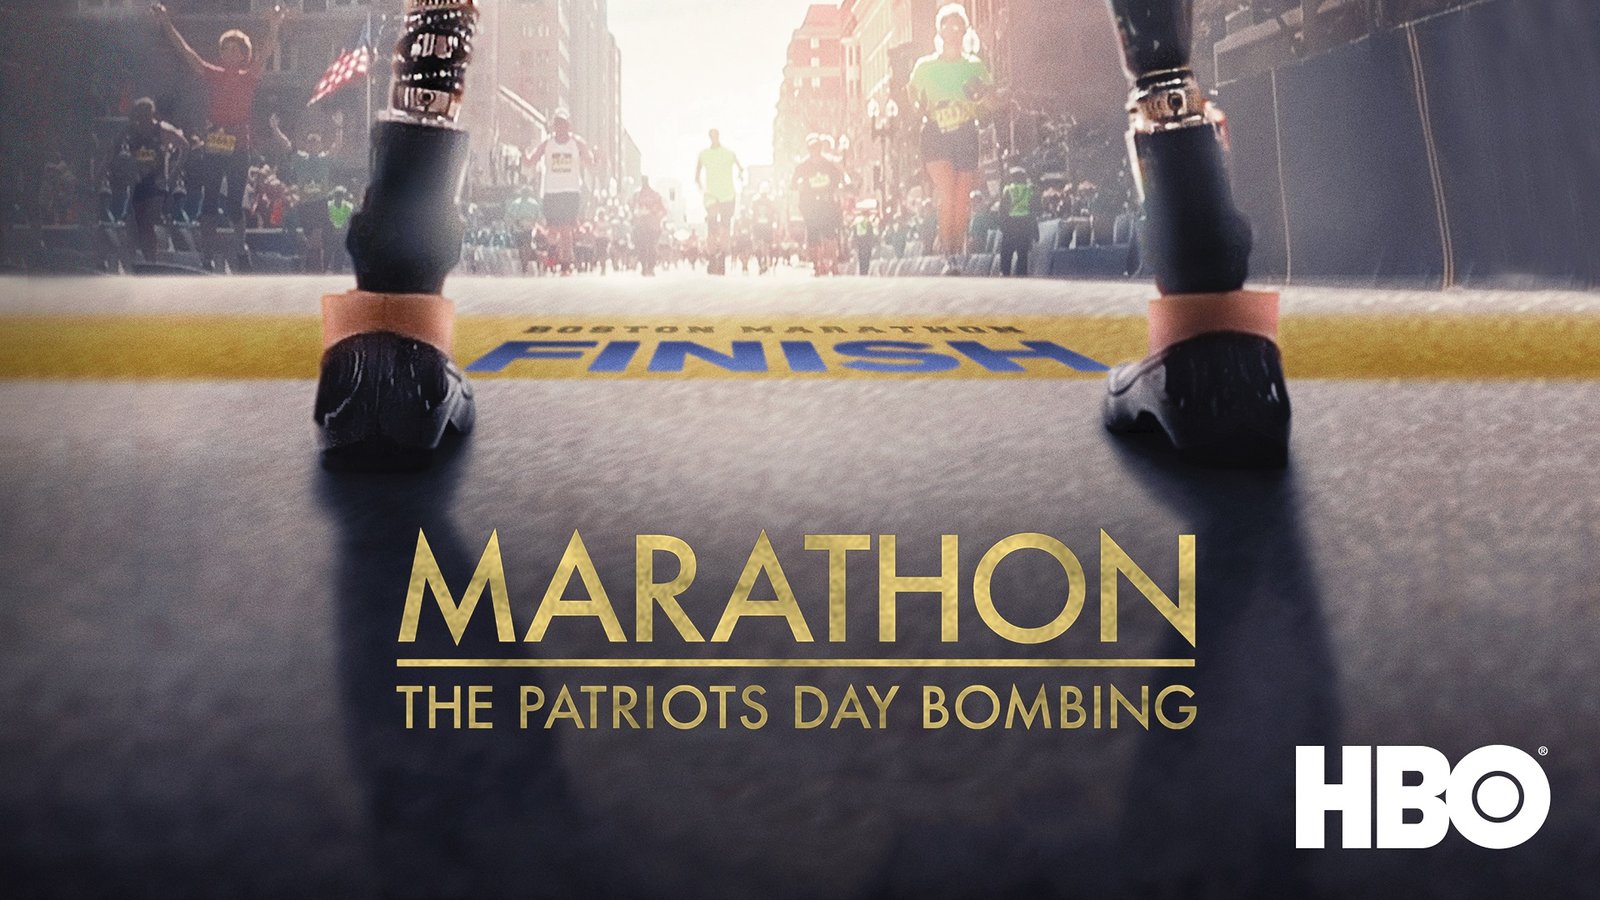 Marathon: The Patriots' Day Bombing - The 2013 Boston Marathon Terrorist Bombing and Aftermath